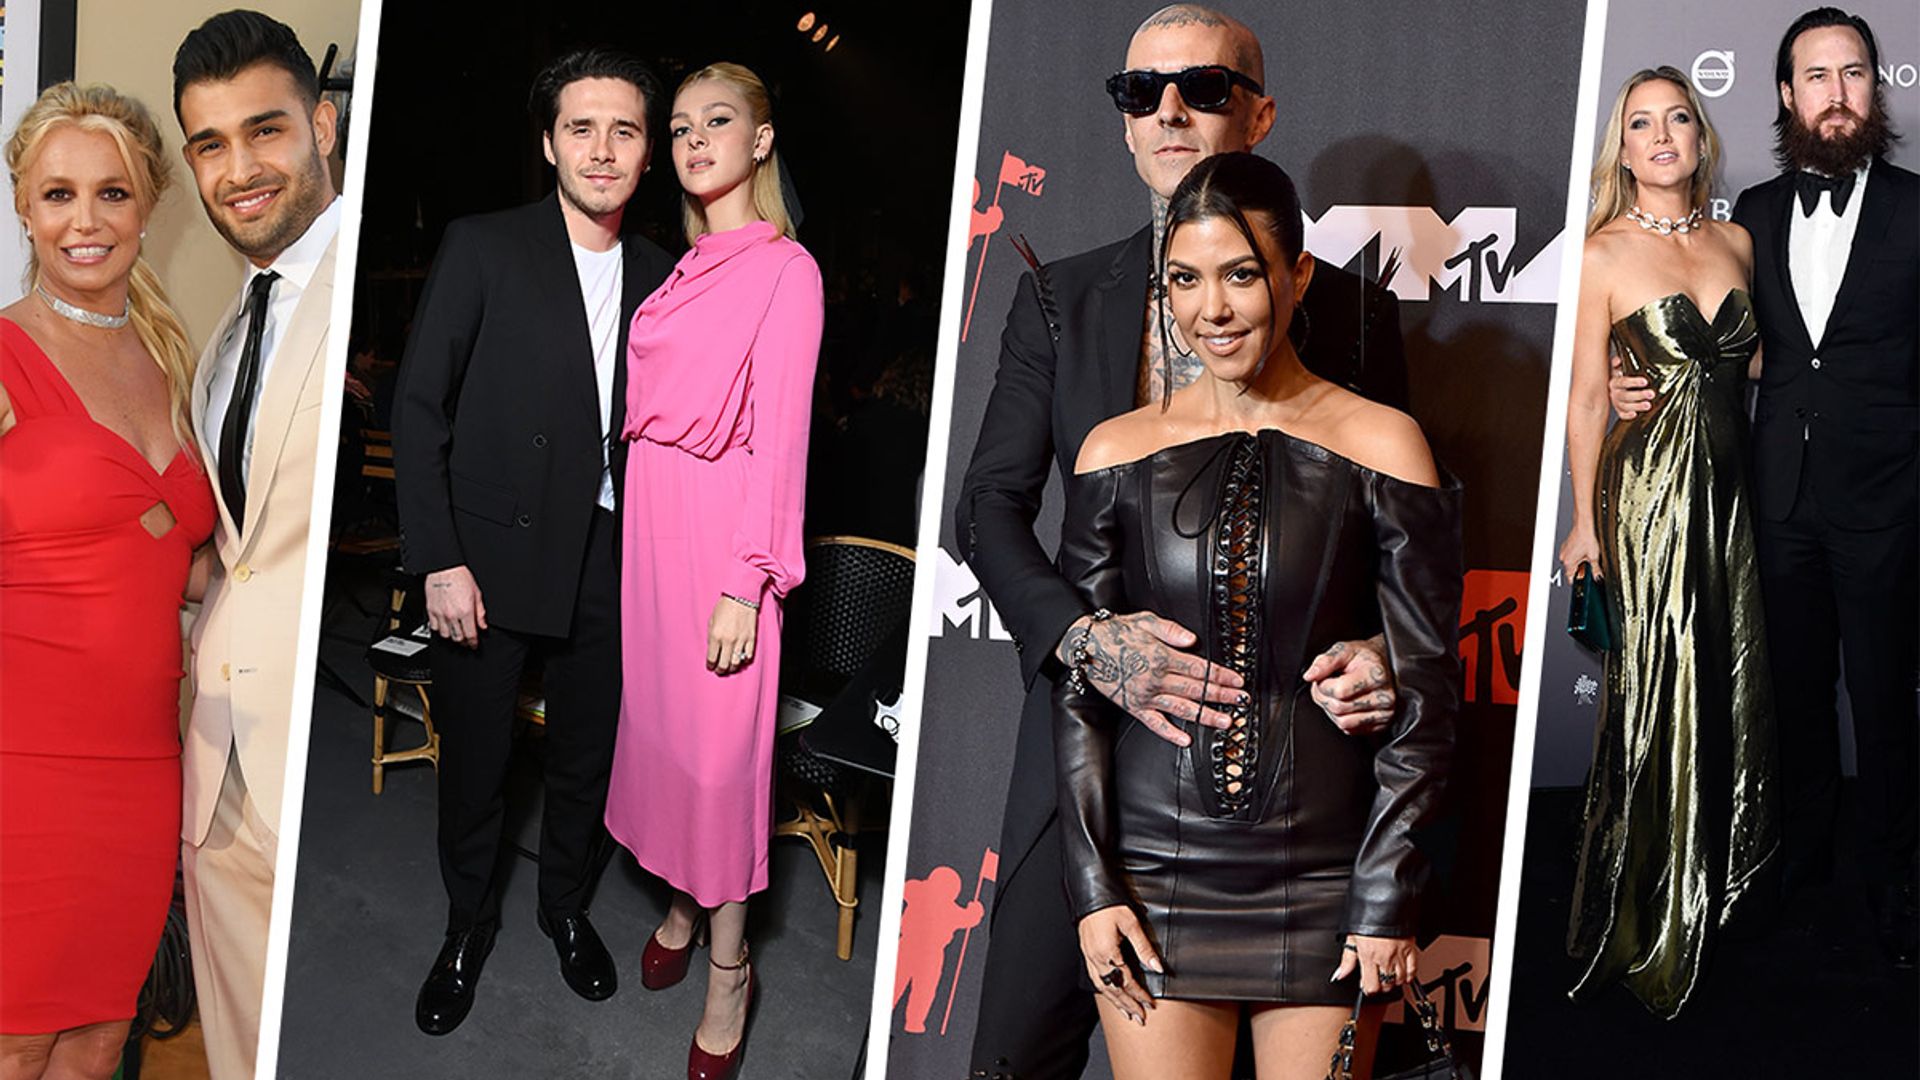 7 celebrity weddings to look forward to in 2022: Brooklyn Beckham, Kourtney Kardashian, more